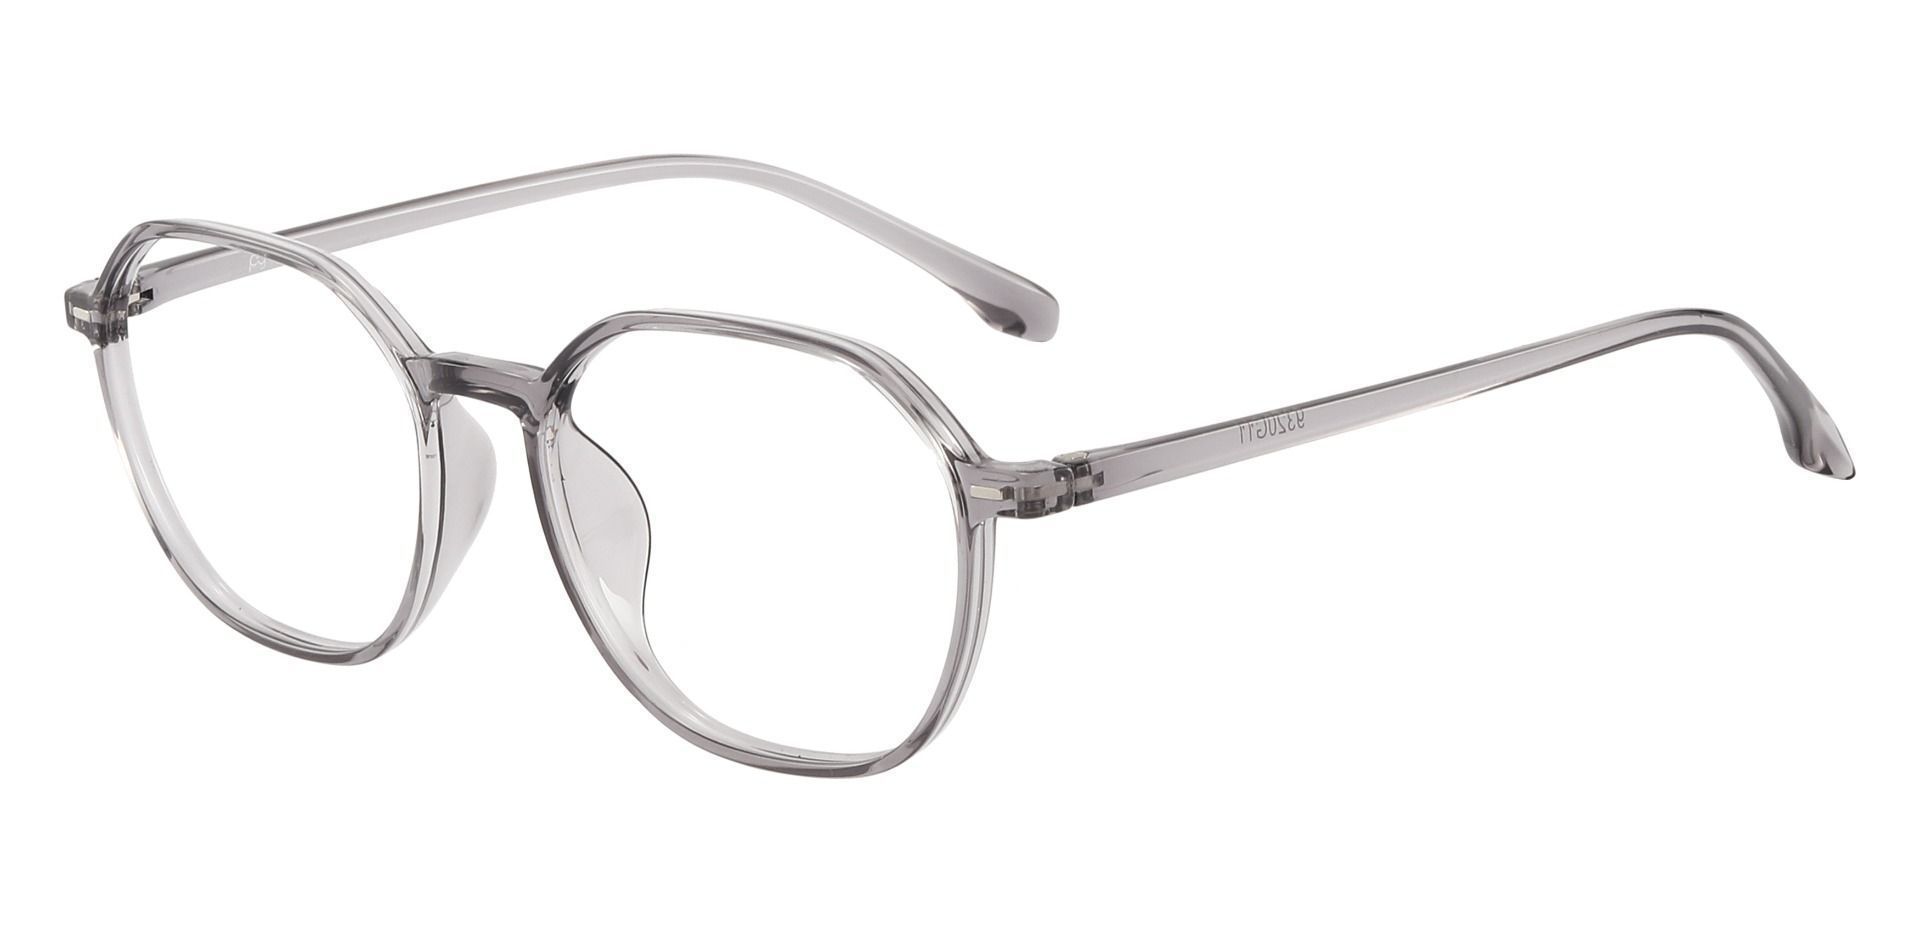 Detroit Geometric Non-Rx Glasses - Gray